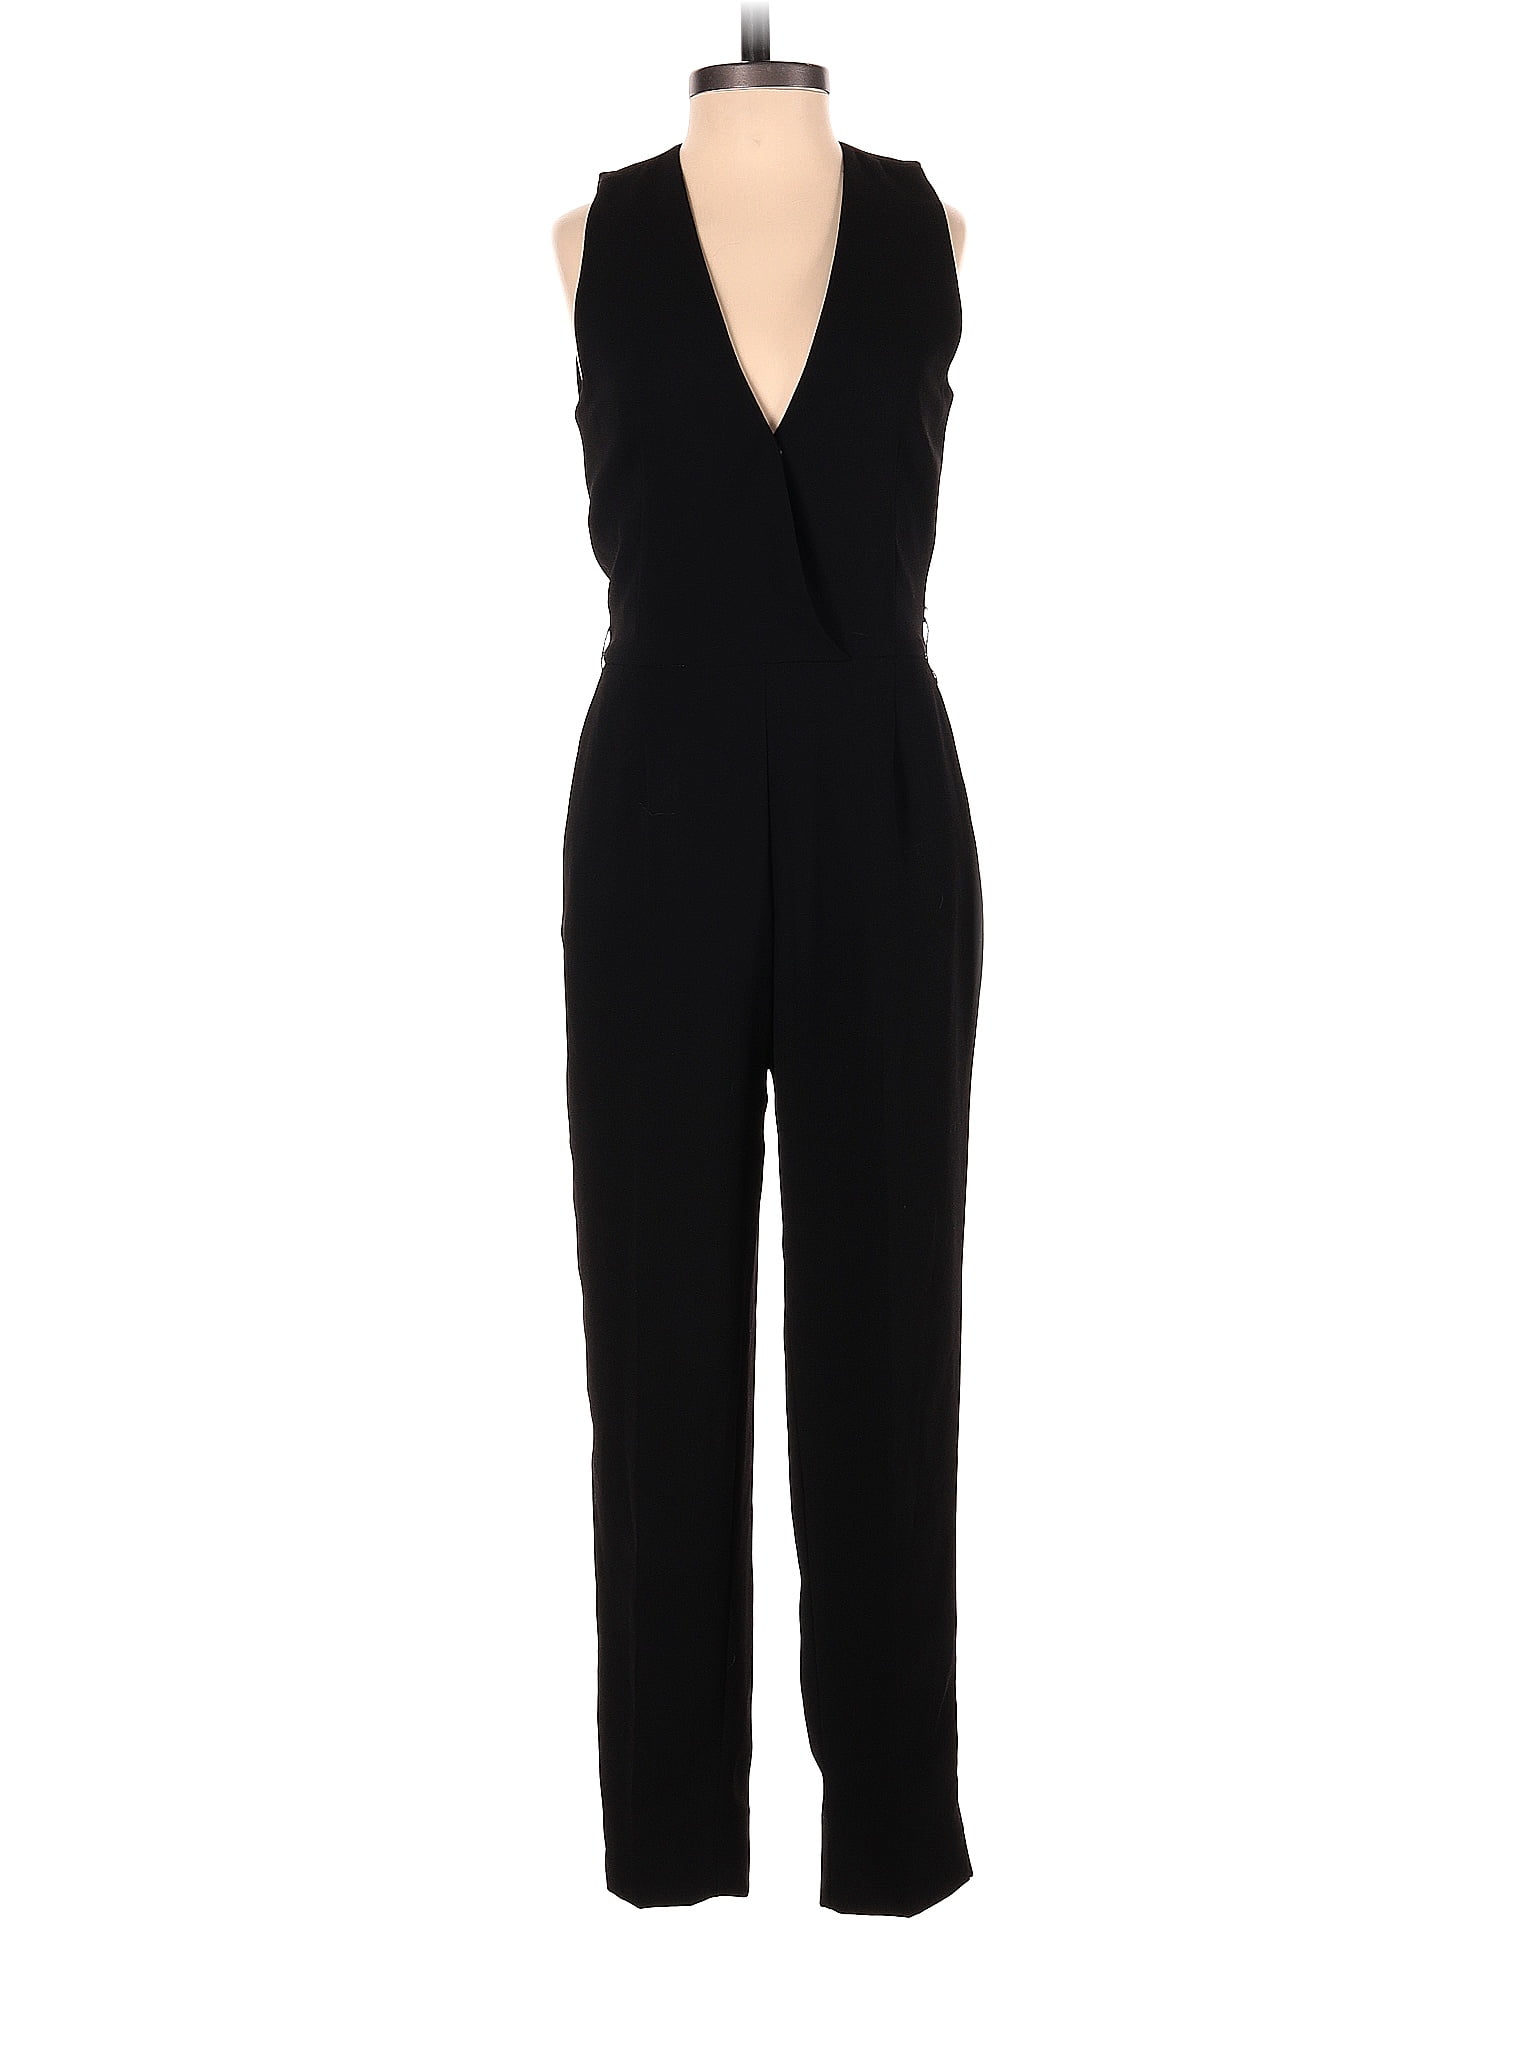 H&M 100% Polyester Solid Black Jumpsuit Size 2 - 62% off | thredUP